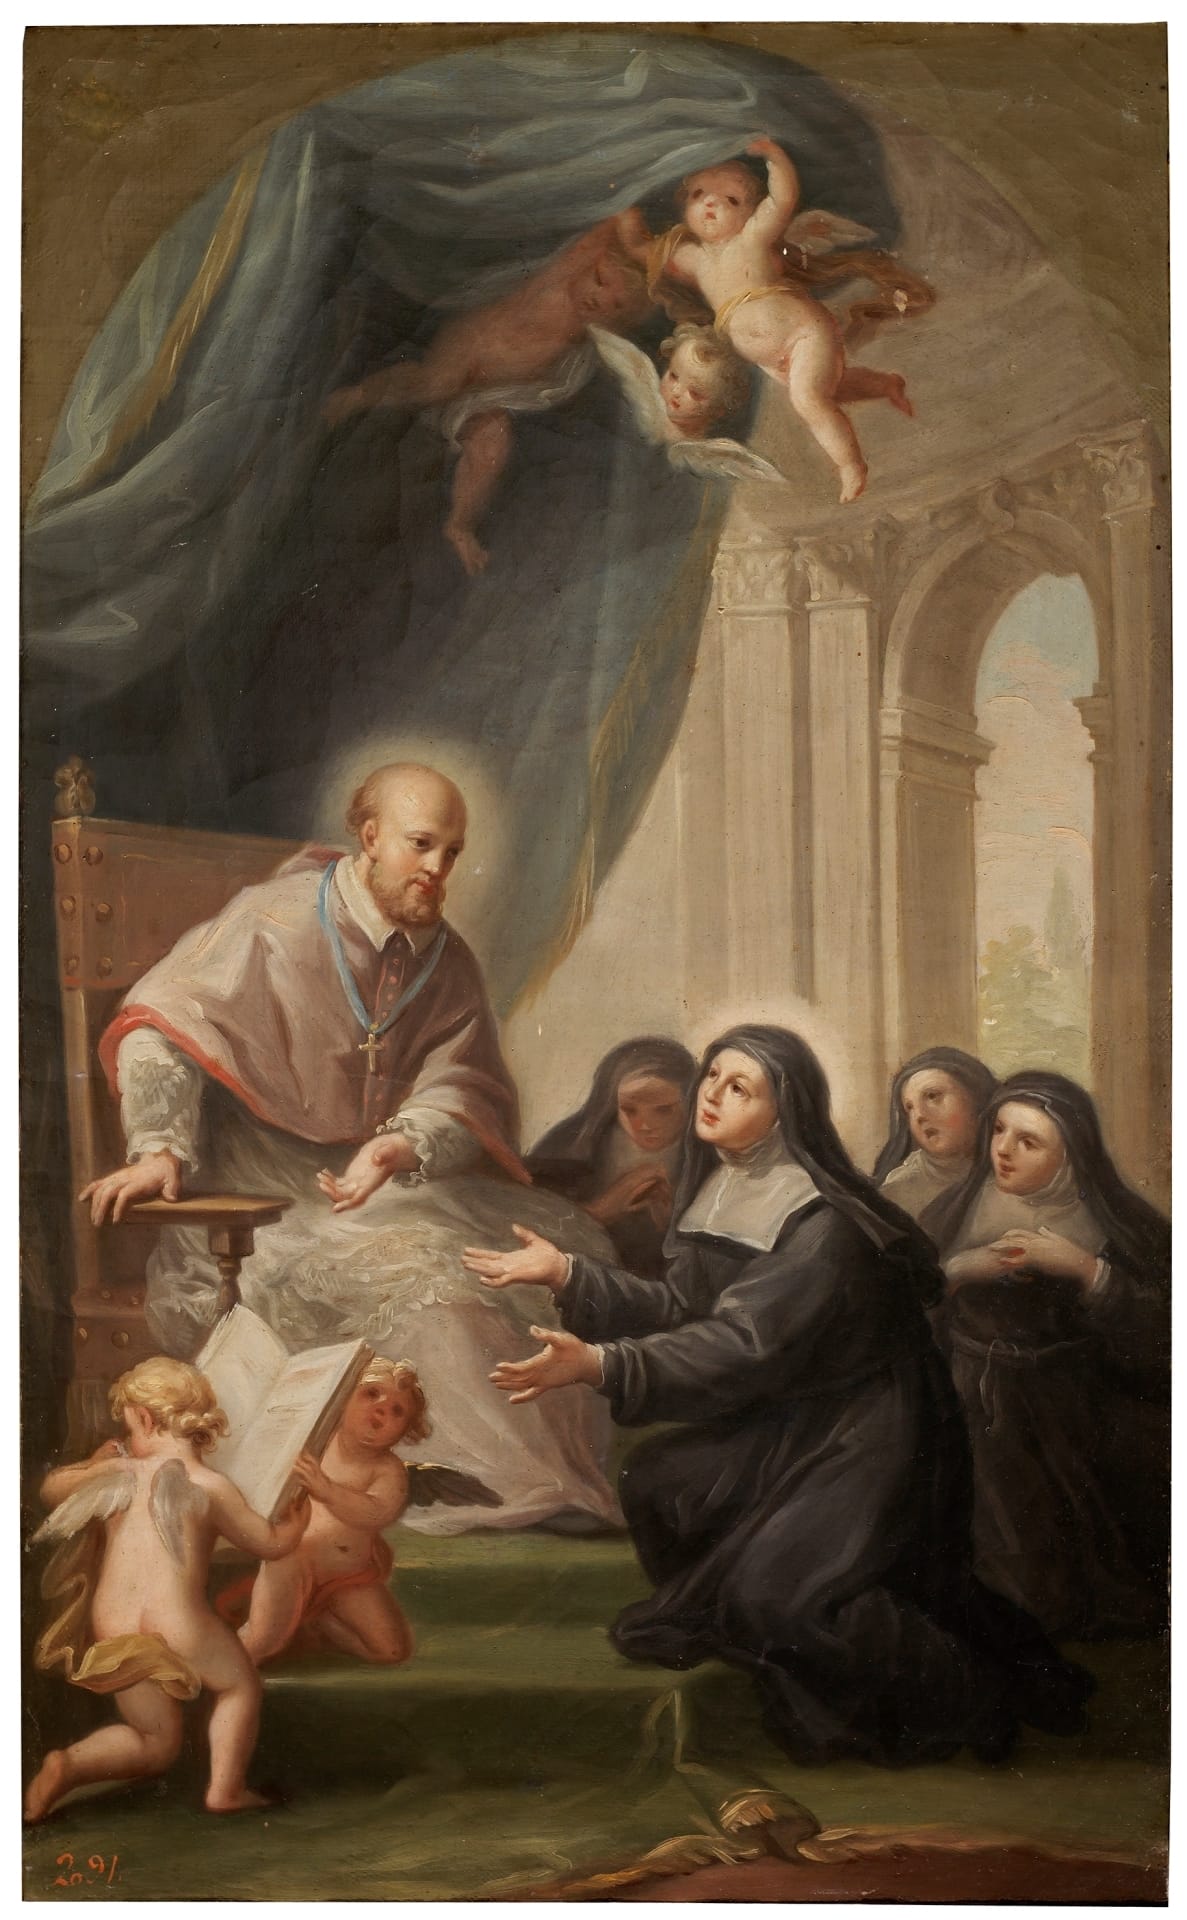 Saint Francis de Sales (18th century) by Francisco Bayeu y Subías - Public Domain Catholic Painting